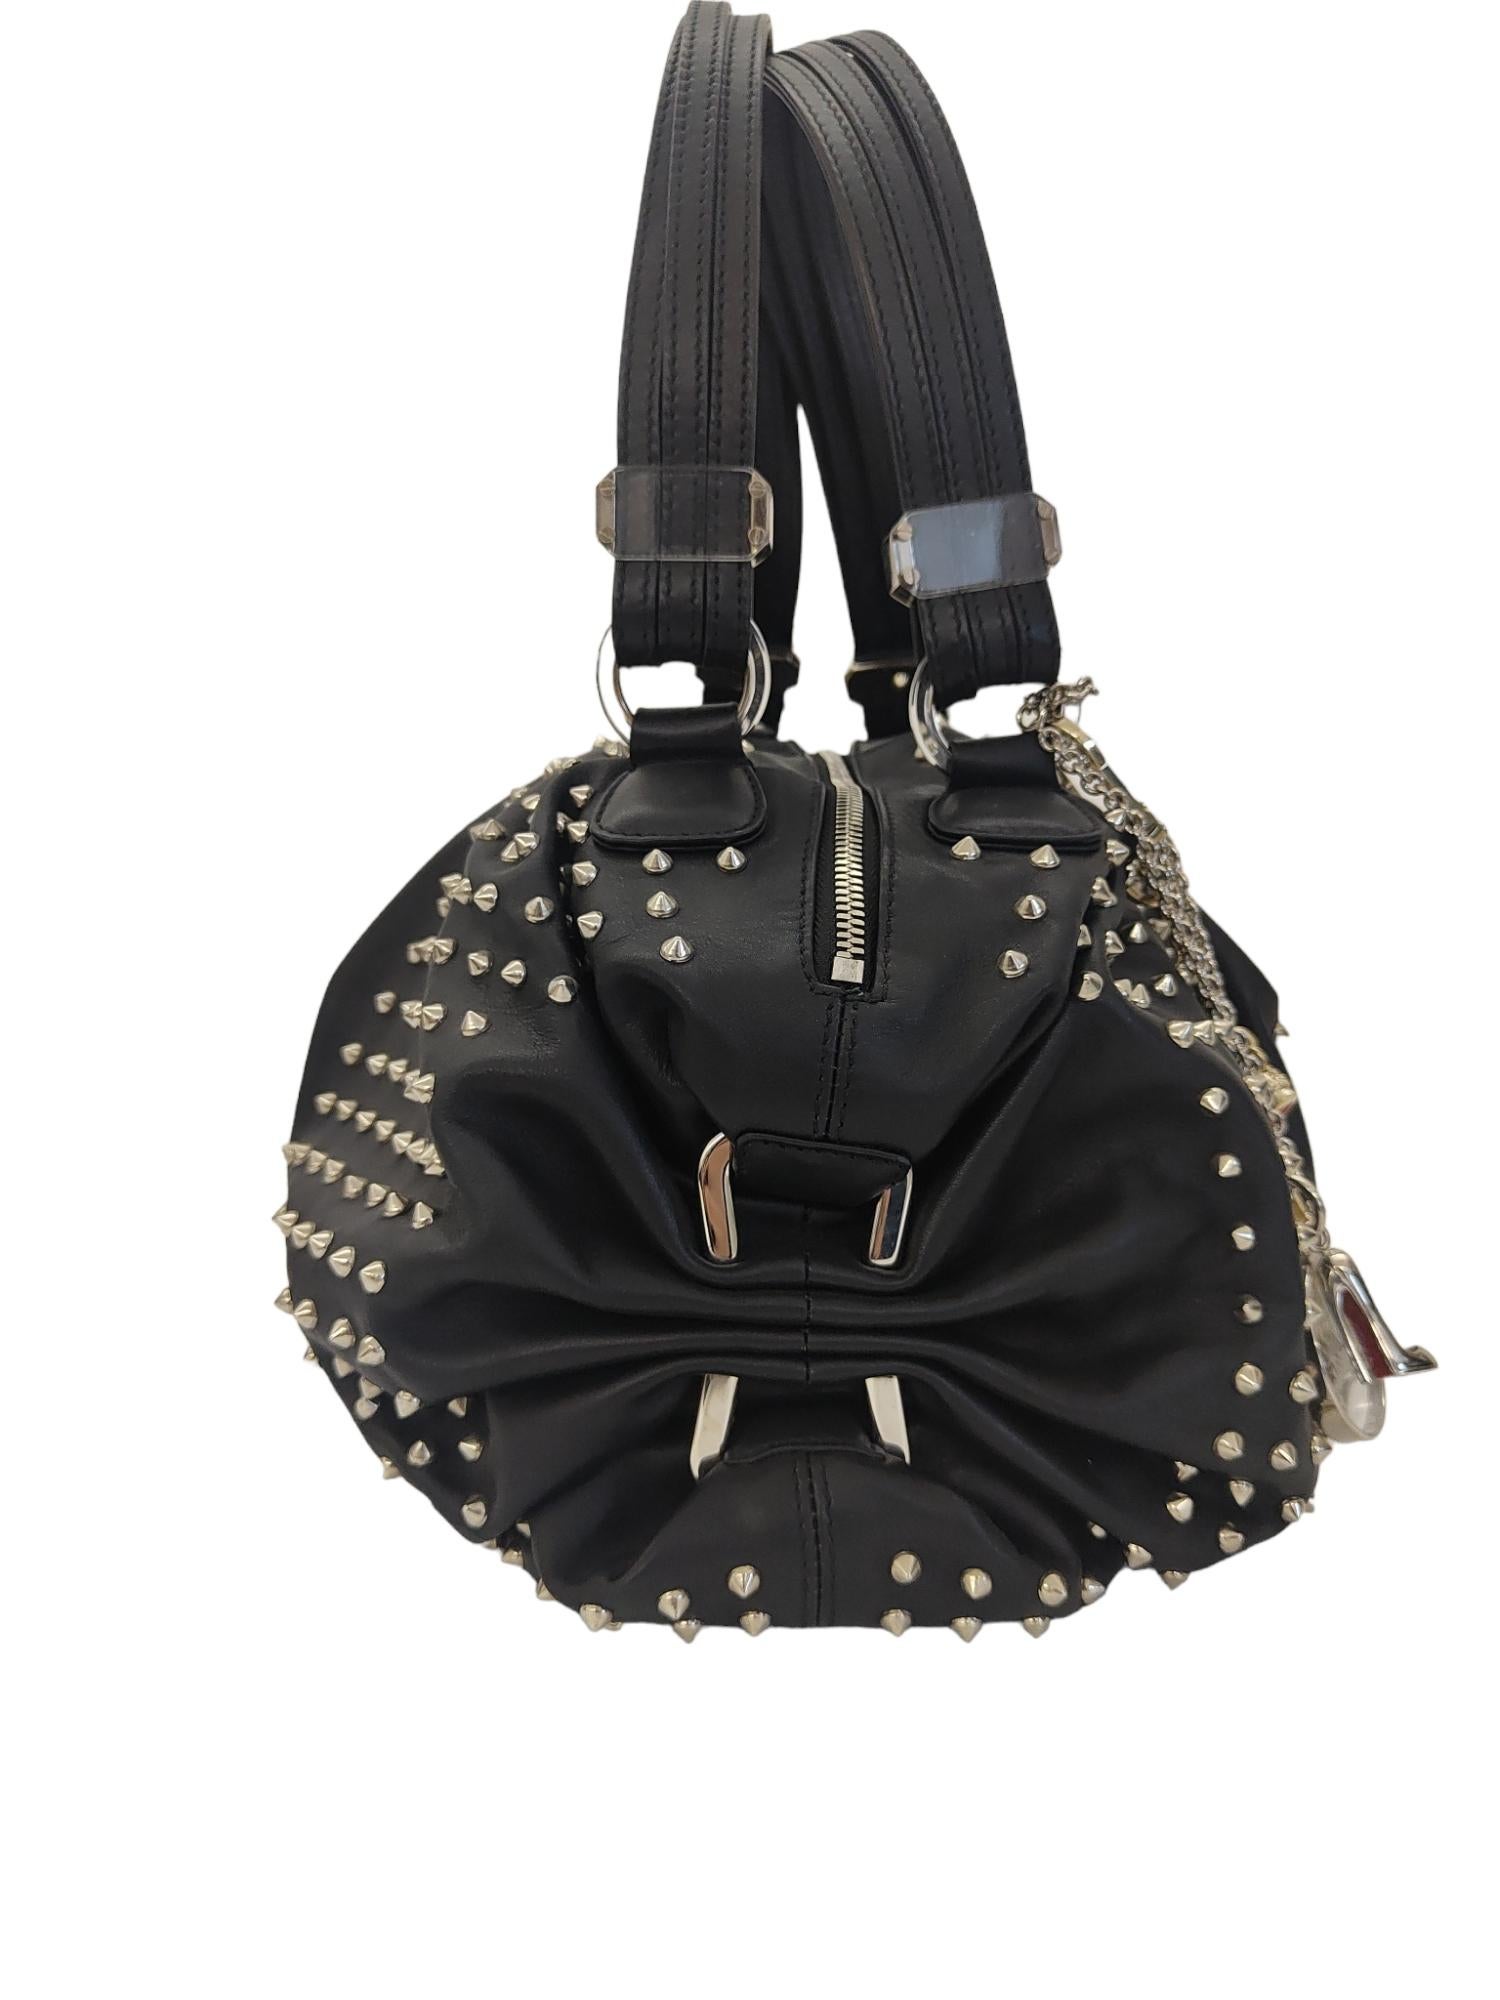 Christian Loboutin black leather silver studs handle bag For Sale 4